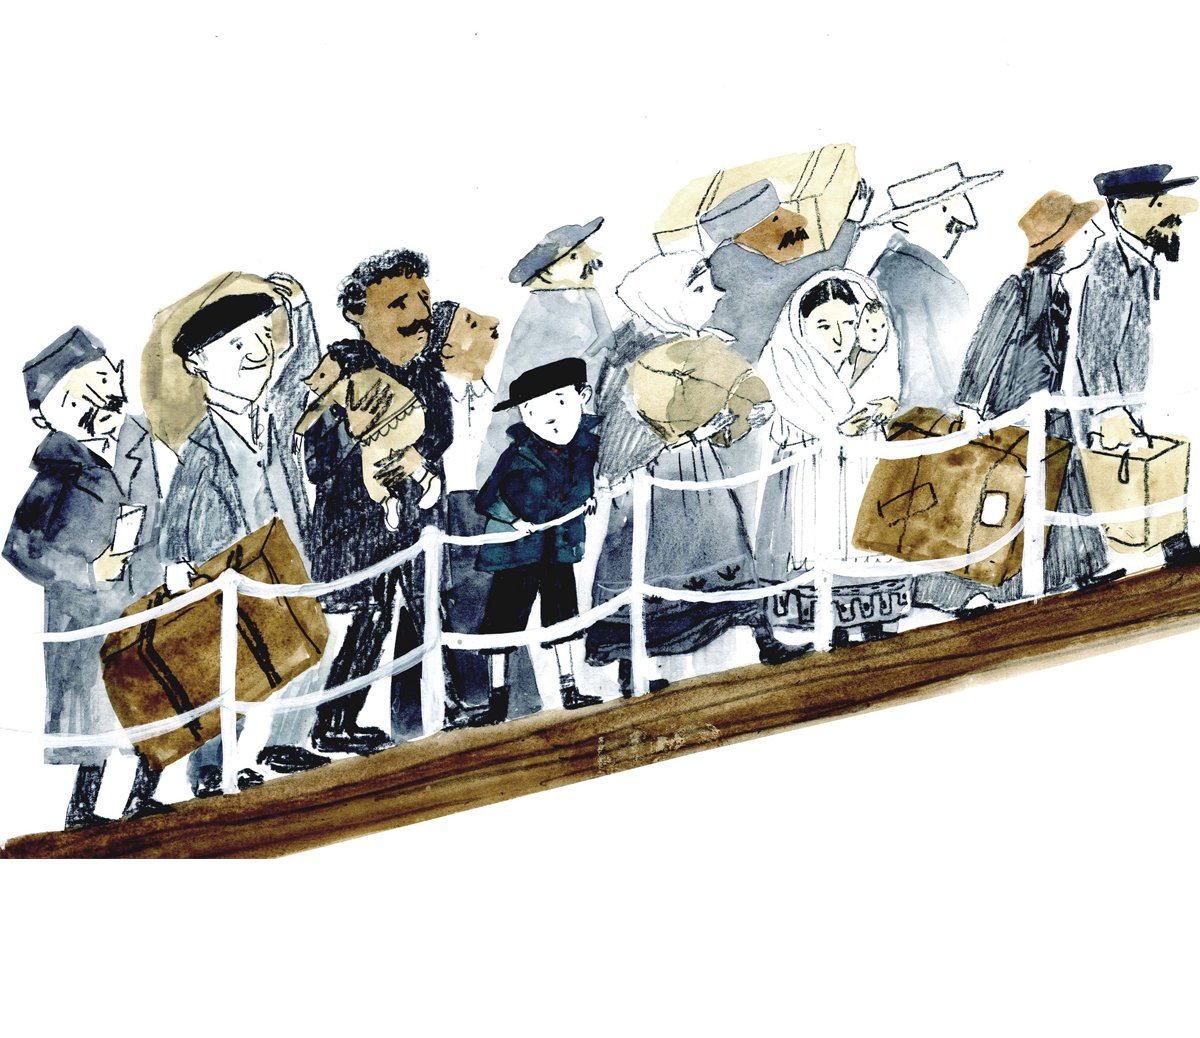 gill-smith-titanic-queue-illustration.jpg